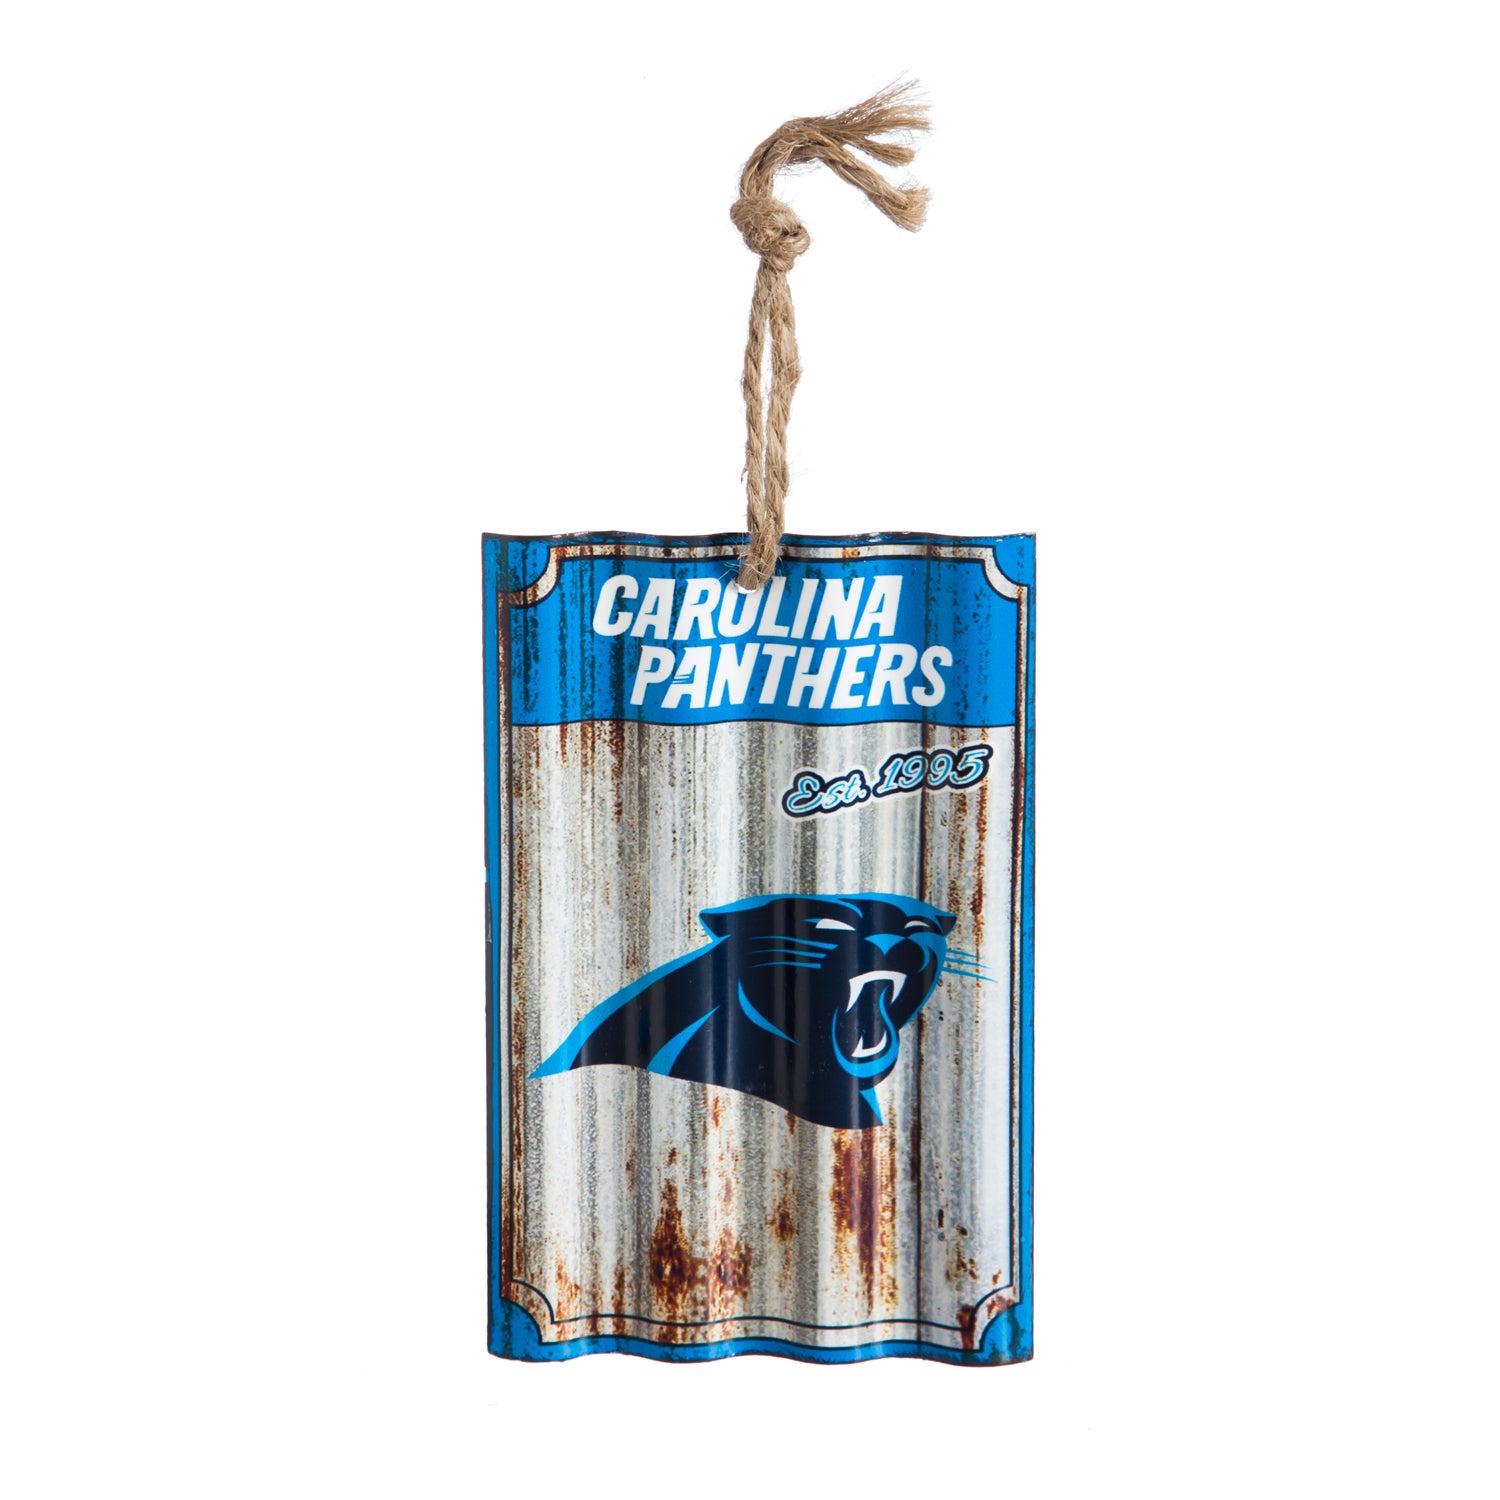 Carolina Panthers Corrugated Metal Ornament